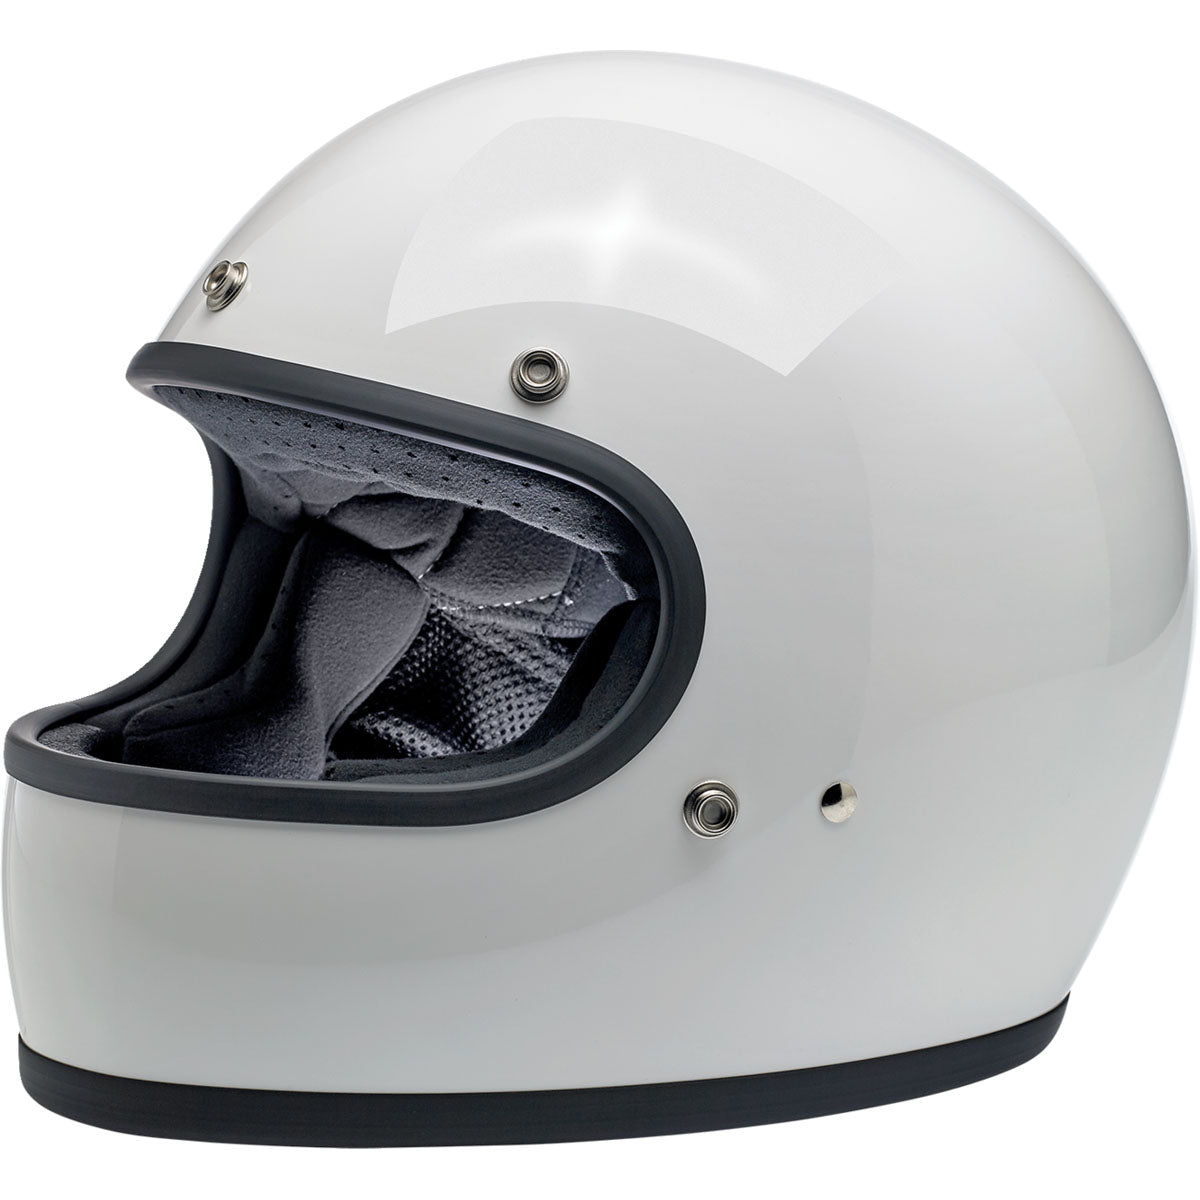 Biltwell Gringo Helmet CLOSEOUT - Gloss White